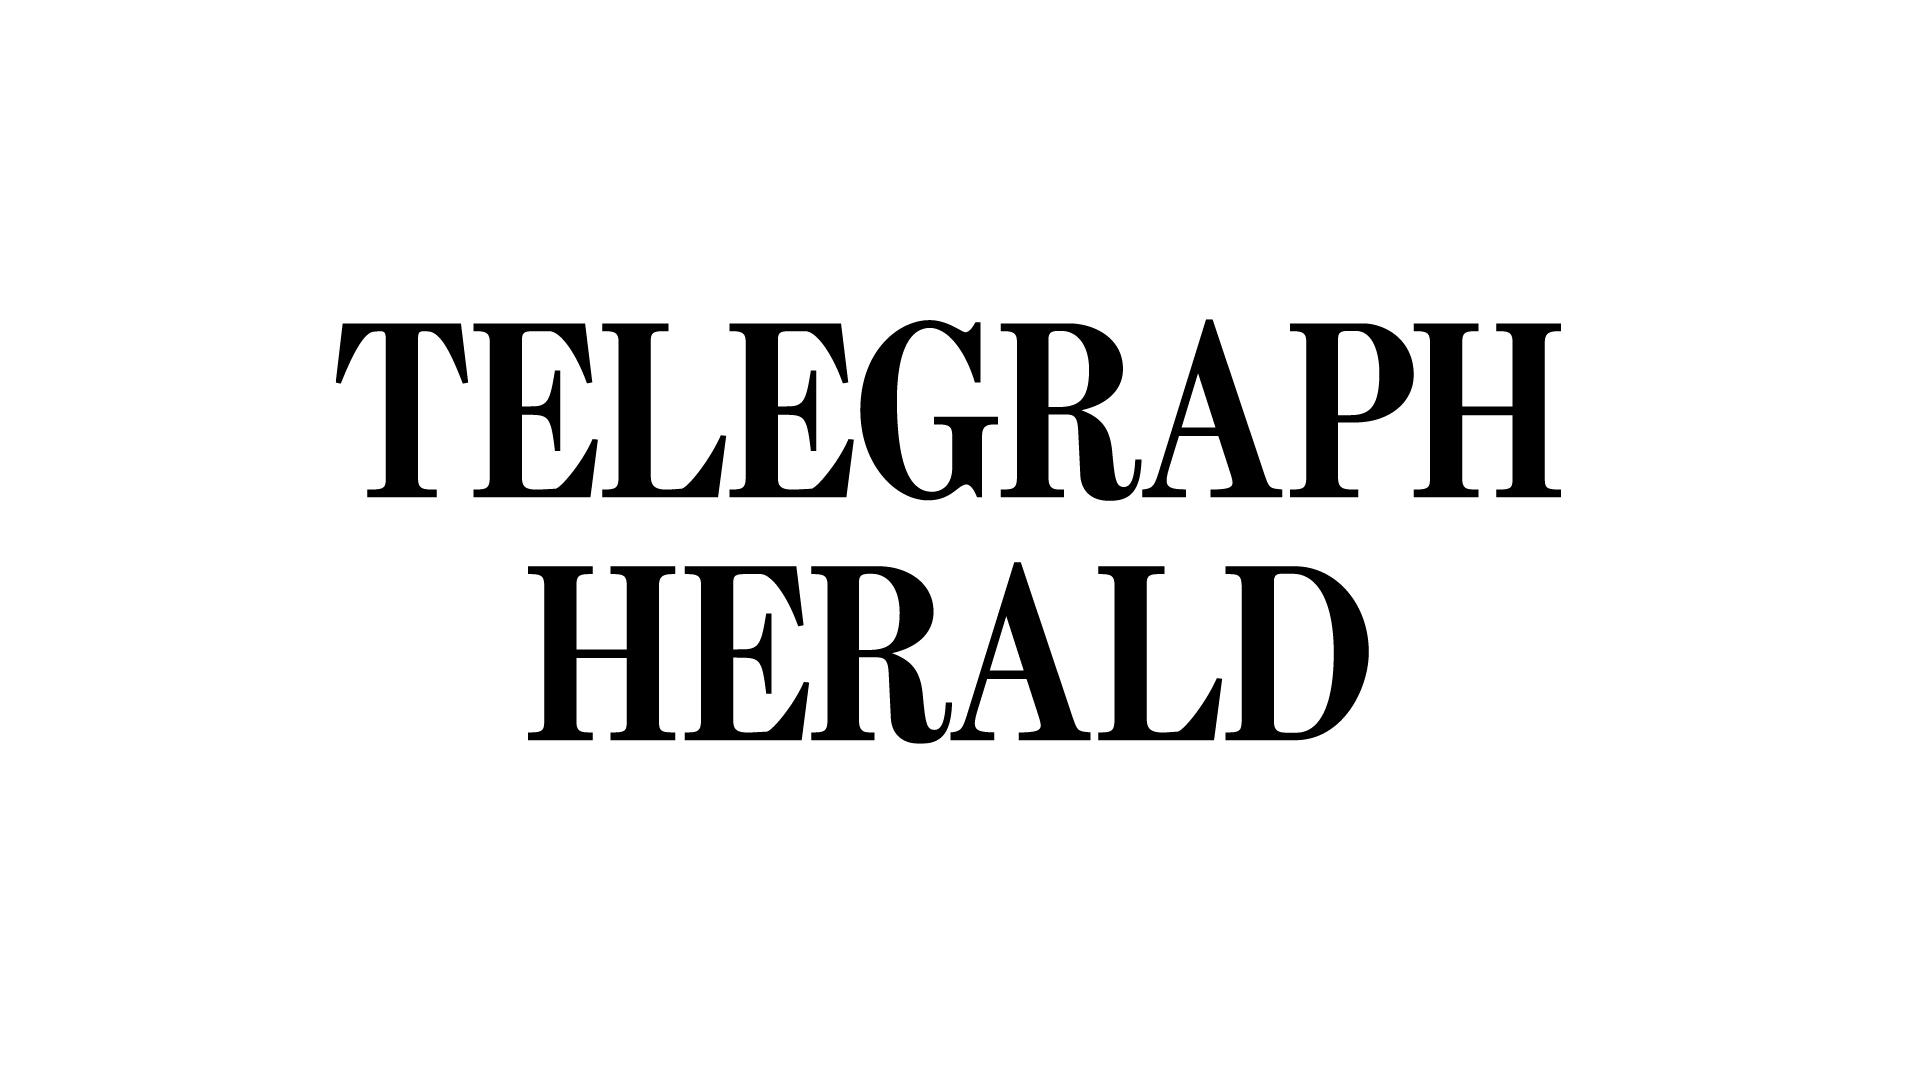 Telegraph Herald